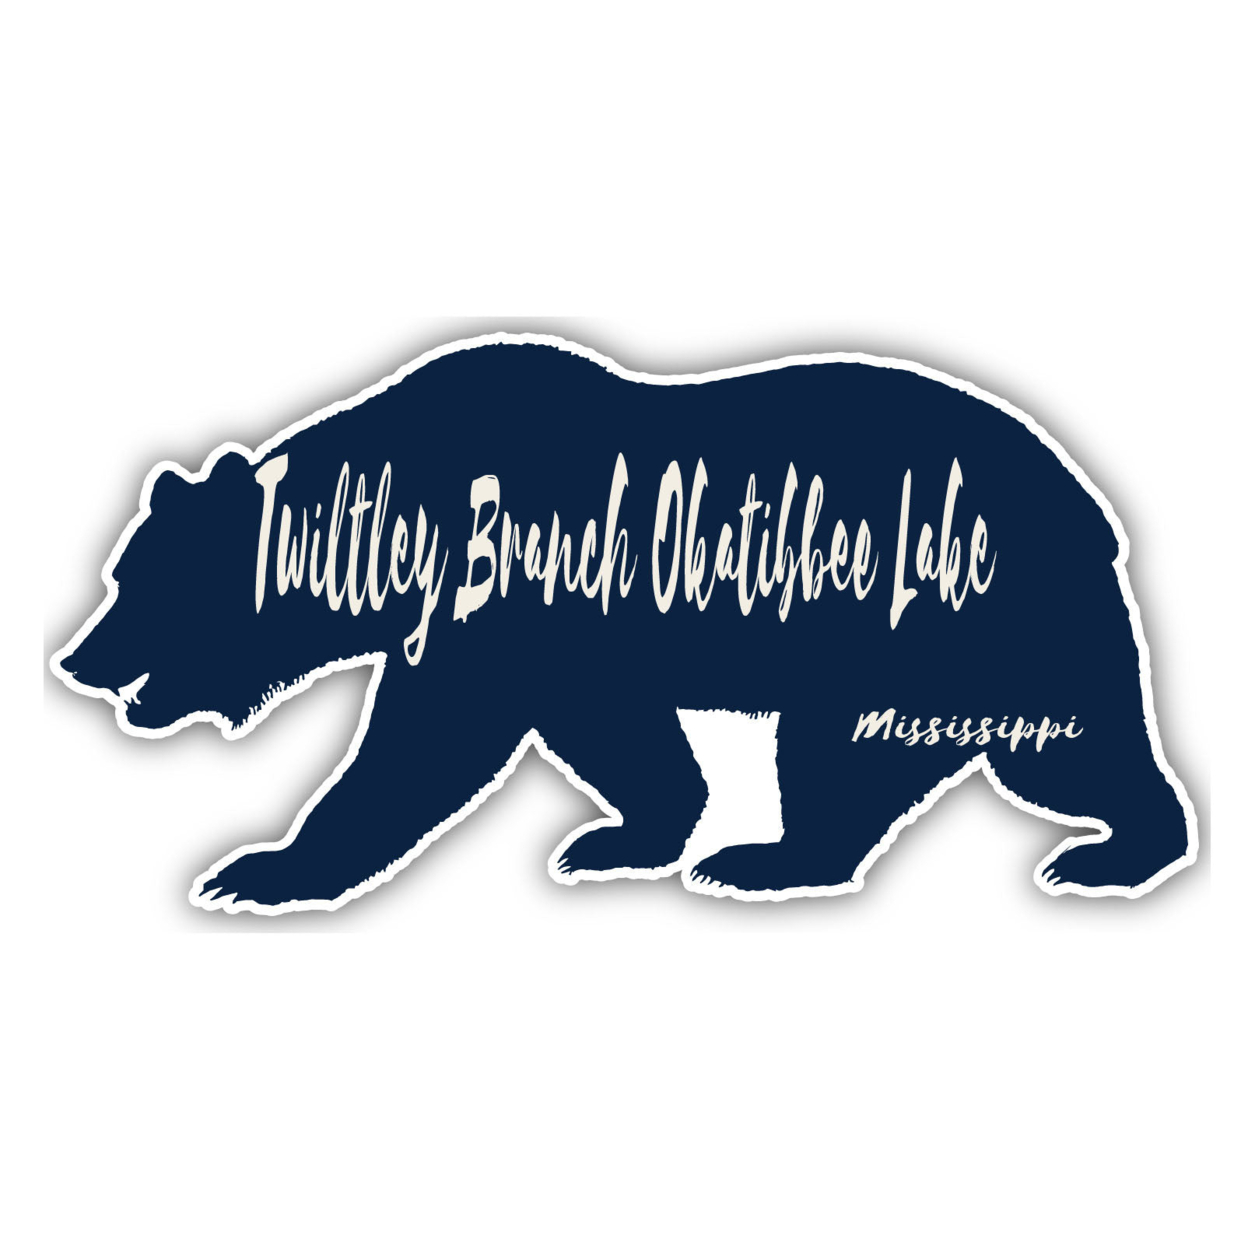 Twiltley Branch Okatibbee Lake Mississippi Souvenir Decorative Stickers (Choose Theme And Size) - Single Unit, 2-Inch, Bear